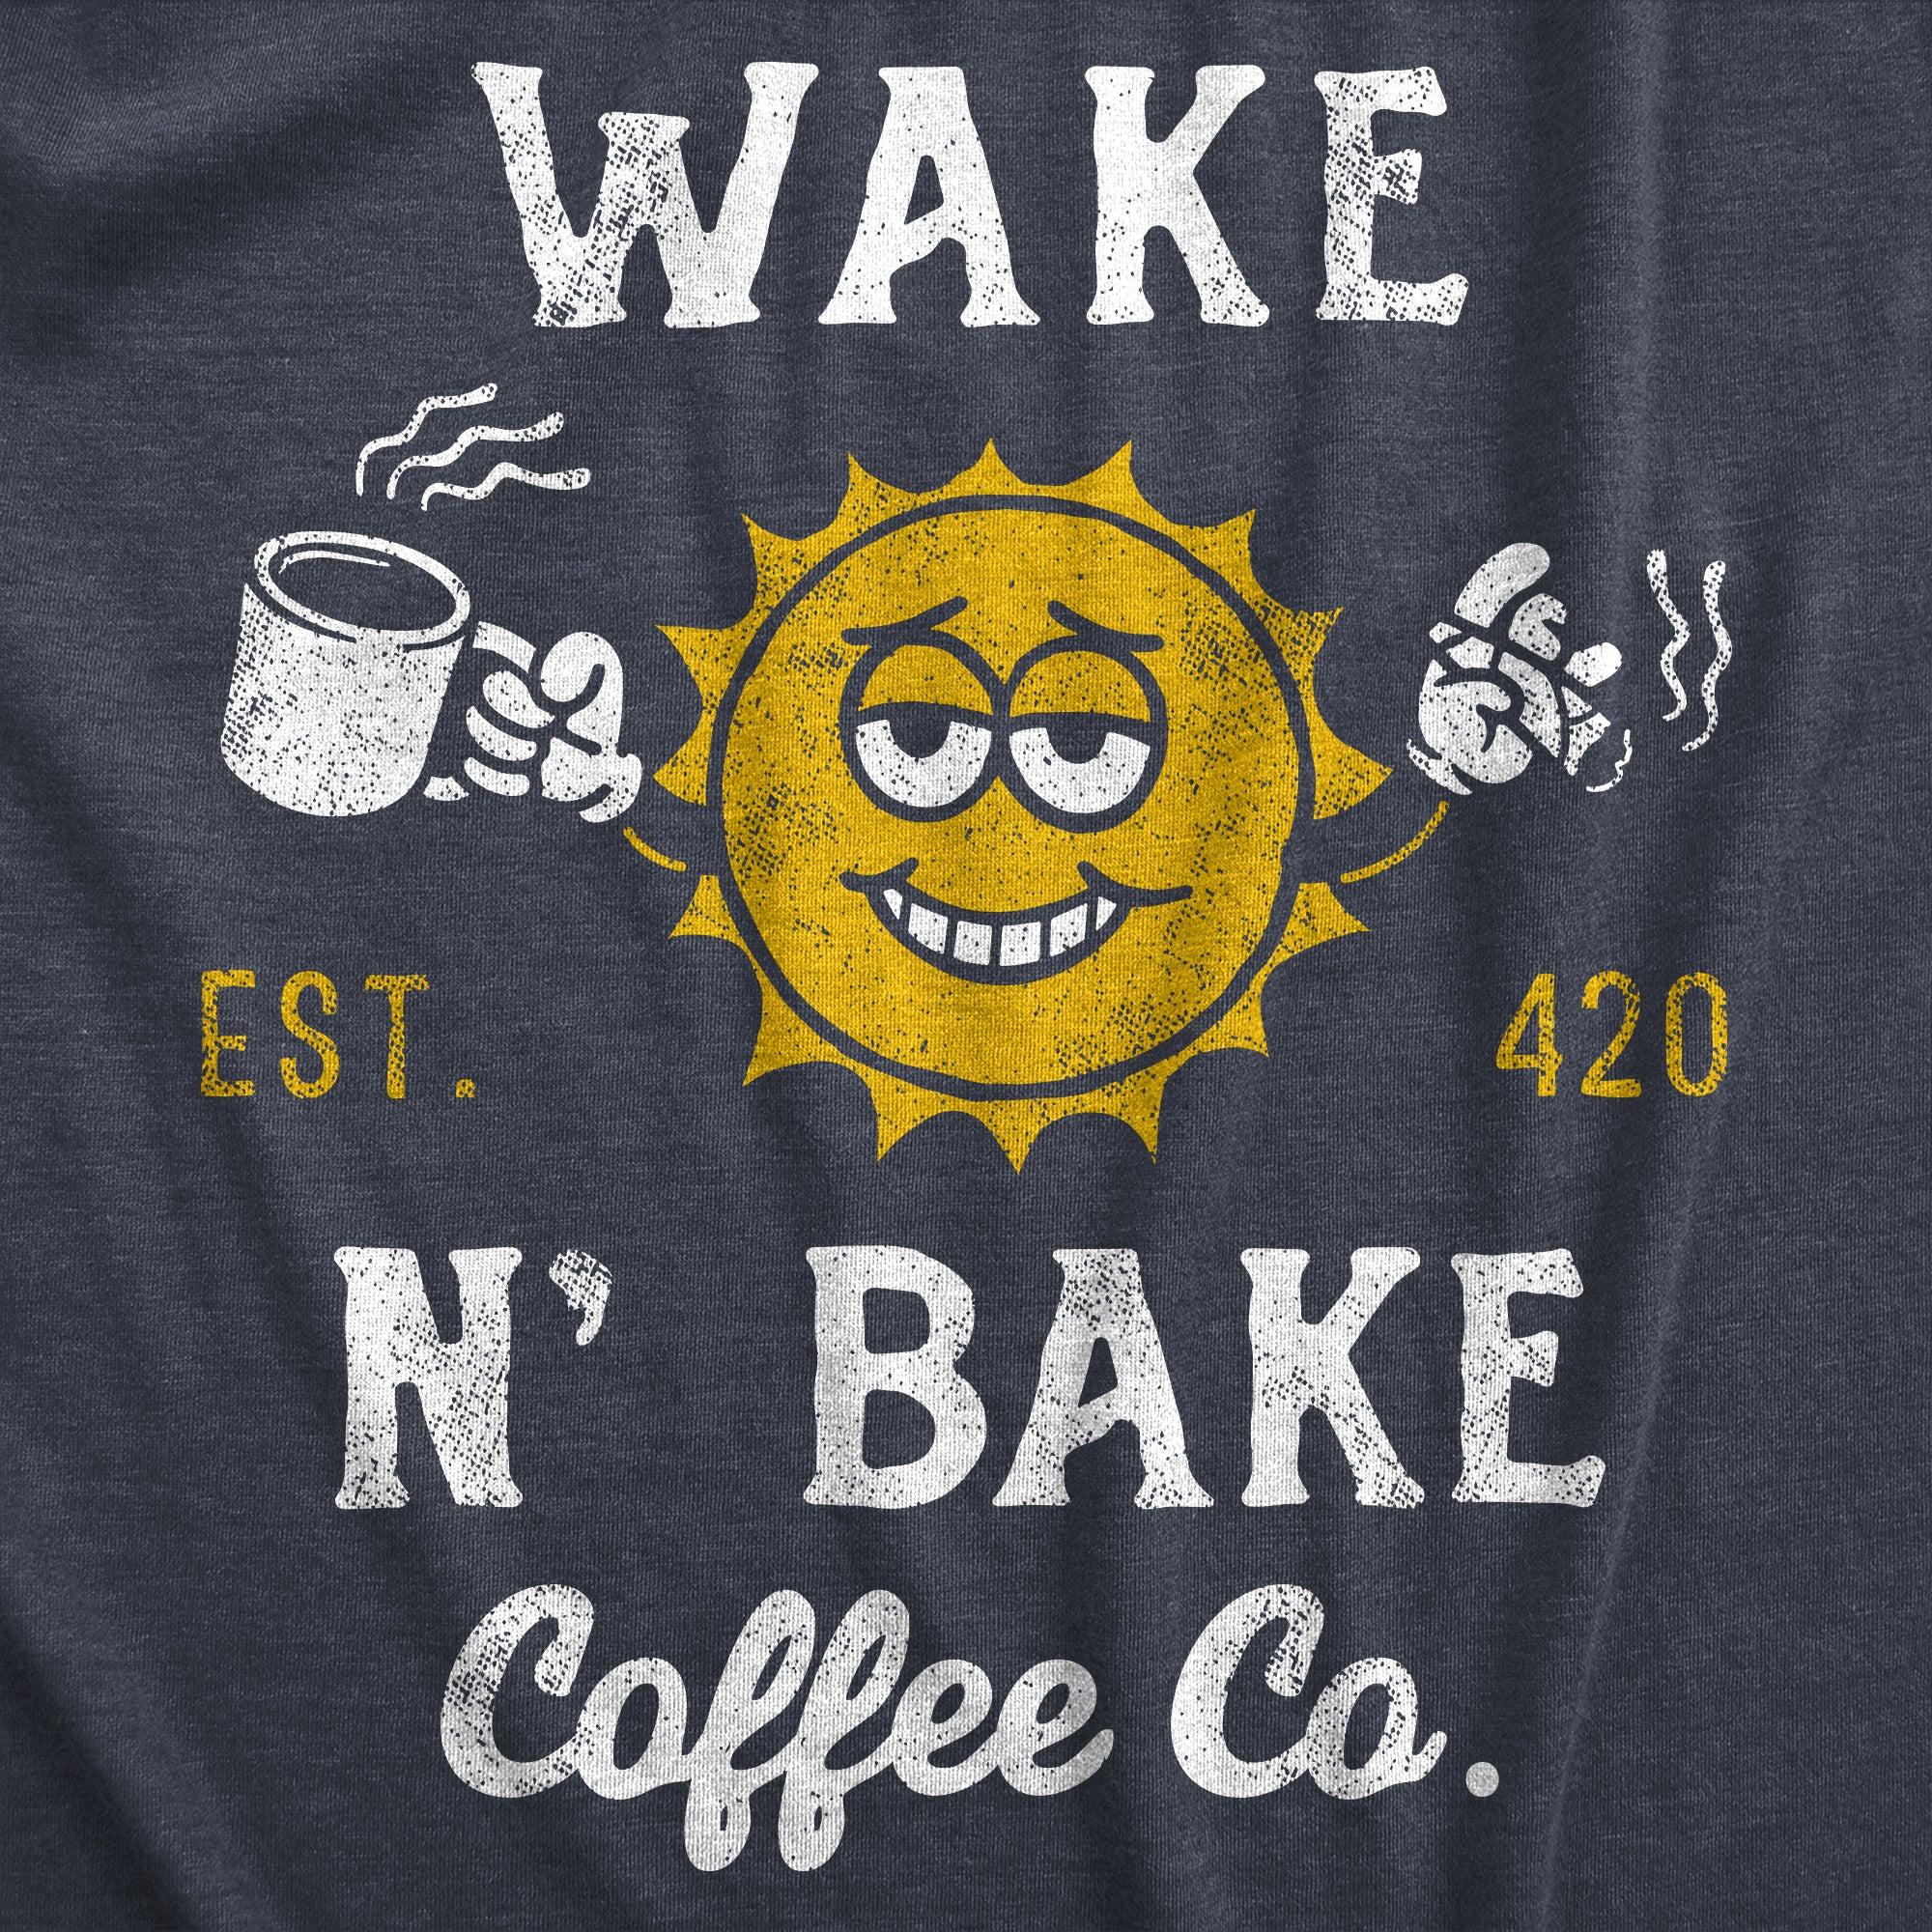 Funny Heather Navy - WAKE Wake N Bake Coffee Co Mens T Shirt Nerdy 420 Coffee Tee